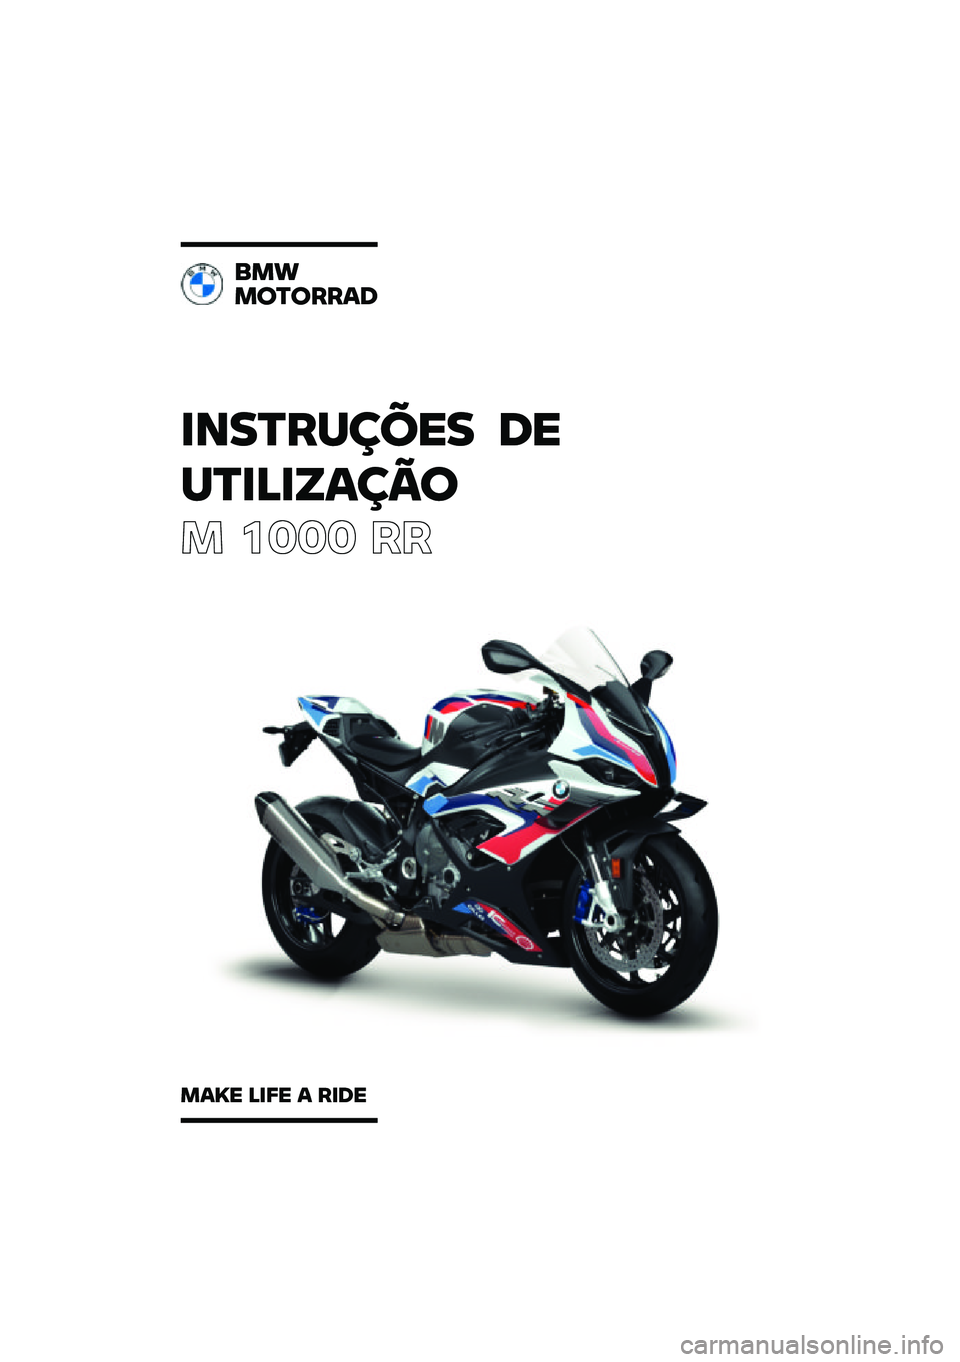 BMW MOTORRAD M 1000 RR 2021  Manual do condutor (in Portuguese) �������\b�	�\f� �
�\f
��������\b��

� ���� ��
���
��
��
����
����\f ����\f � ���
�\f 